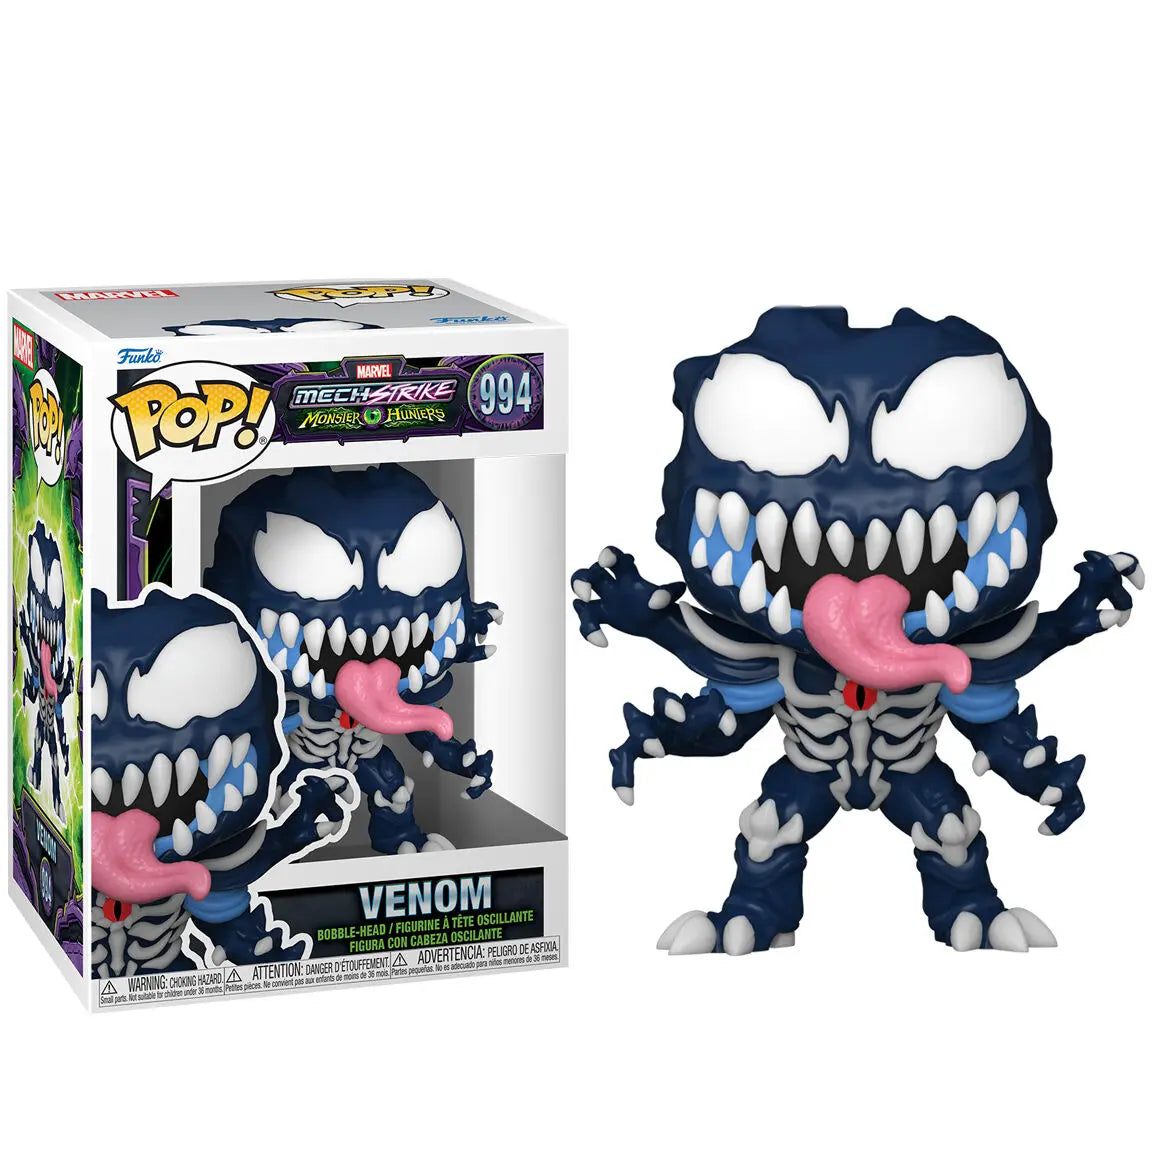 Funko Pop! Marvel Monster Hunters - Venom - BumbleToys - 18+, 5-7 Years, Action Figures, Boys, Funko, Marvel, Pre-Order, Venom